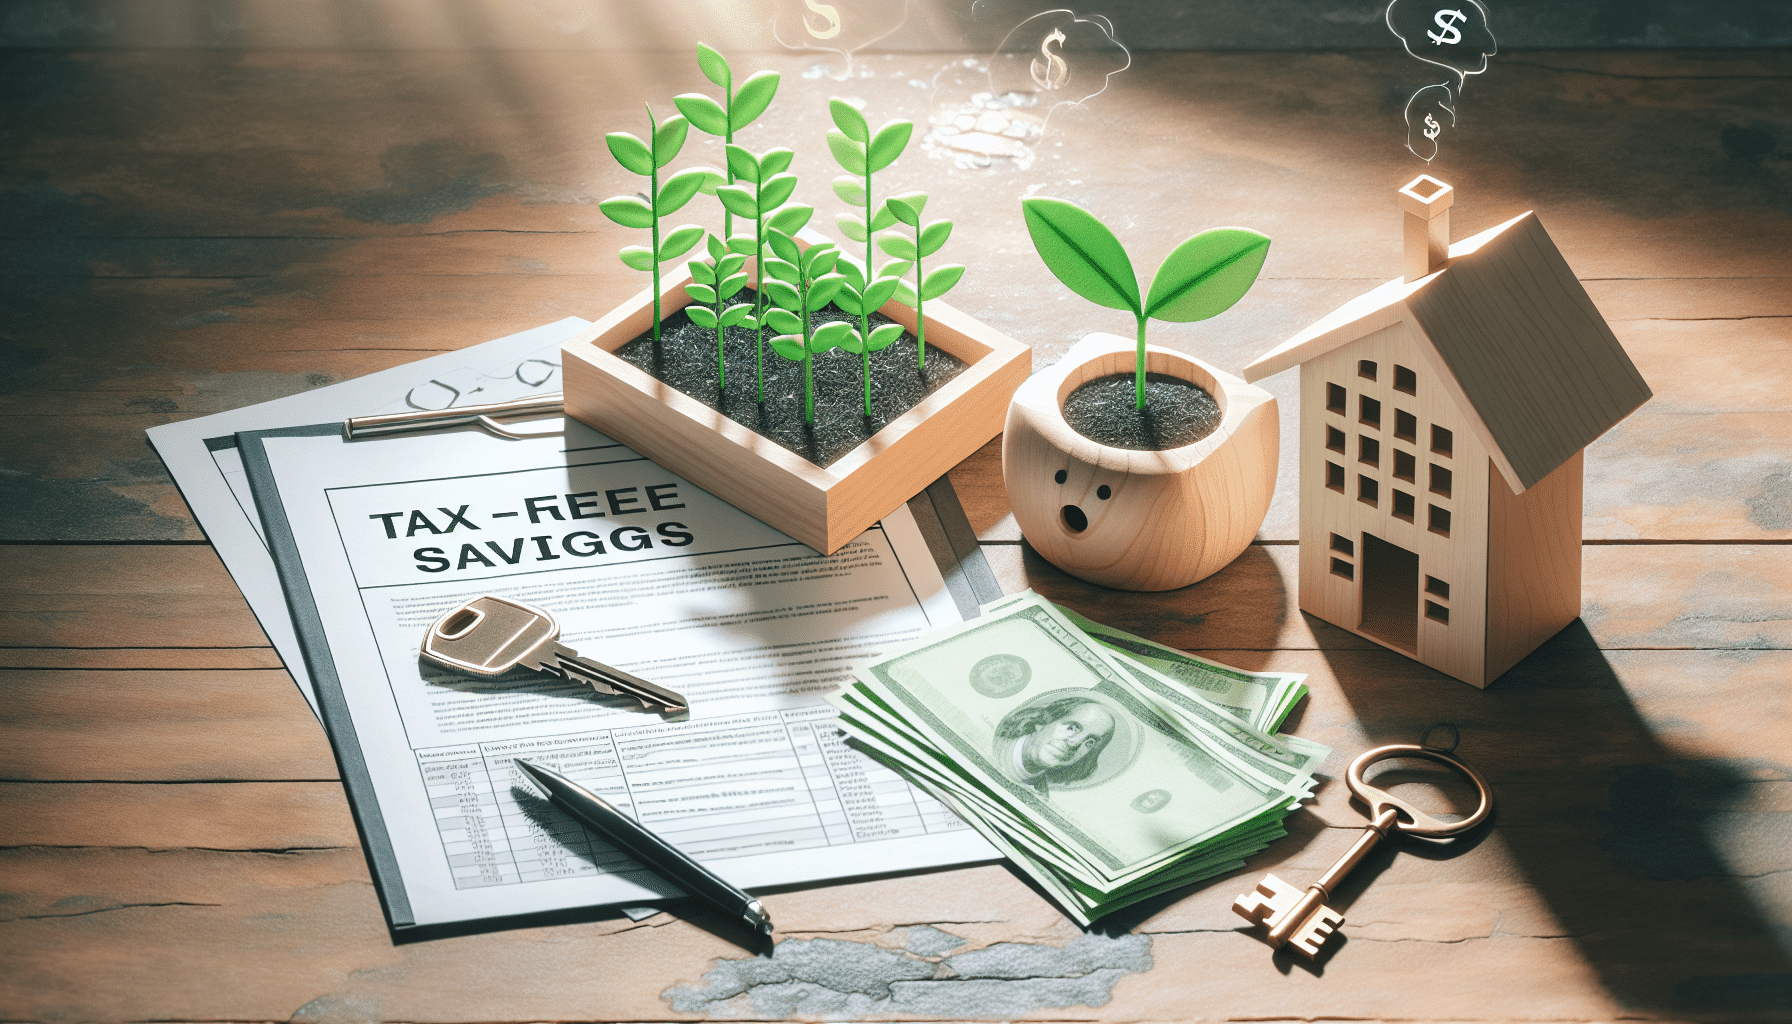 Tax-free Savings Options For Homebuyers